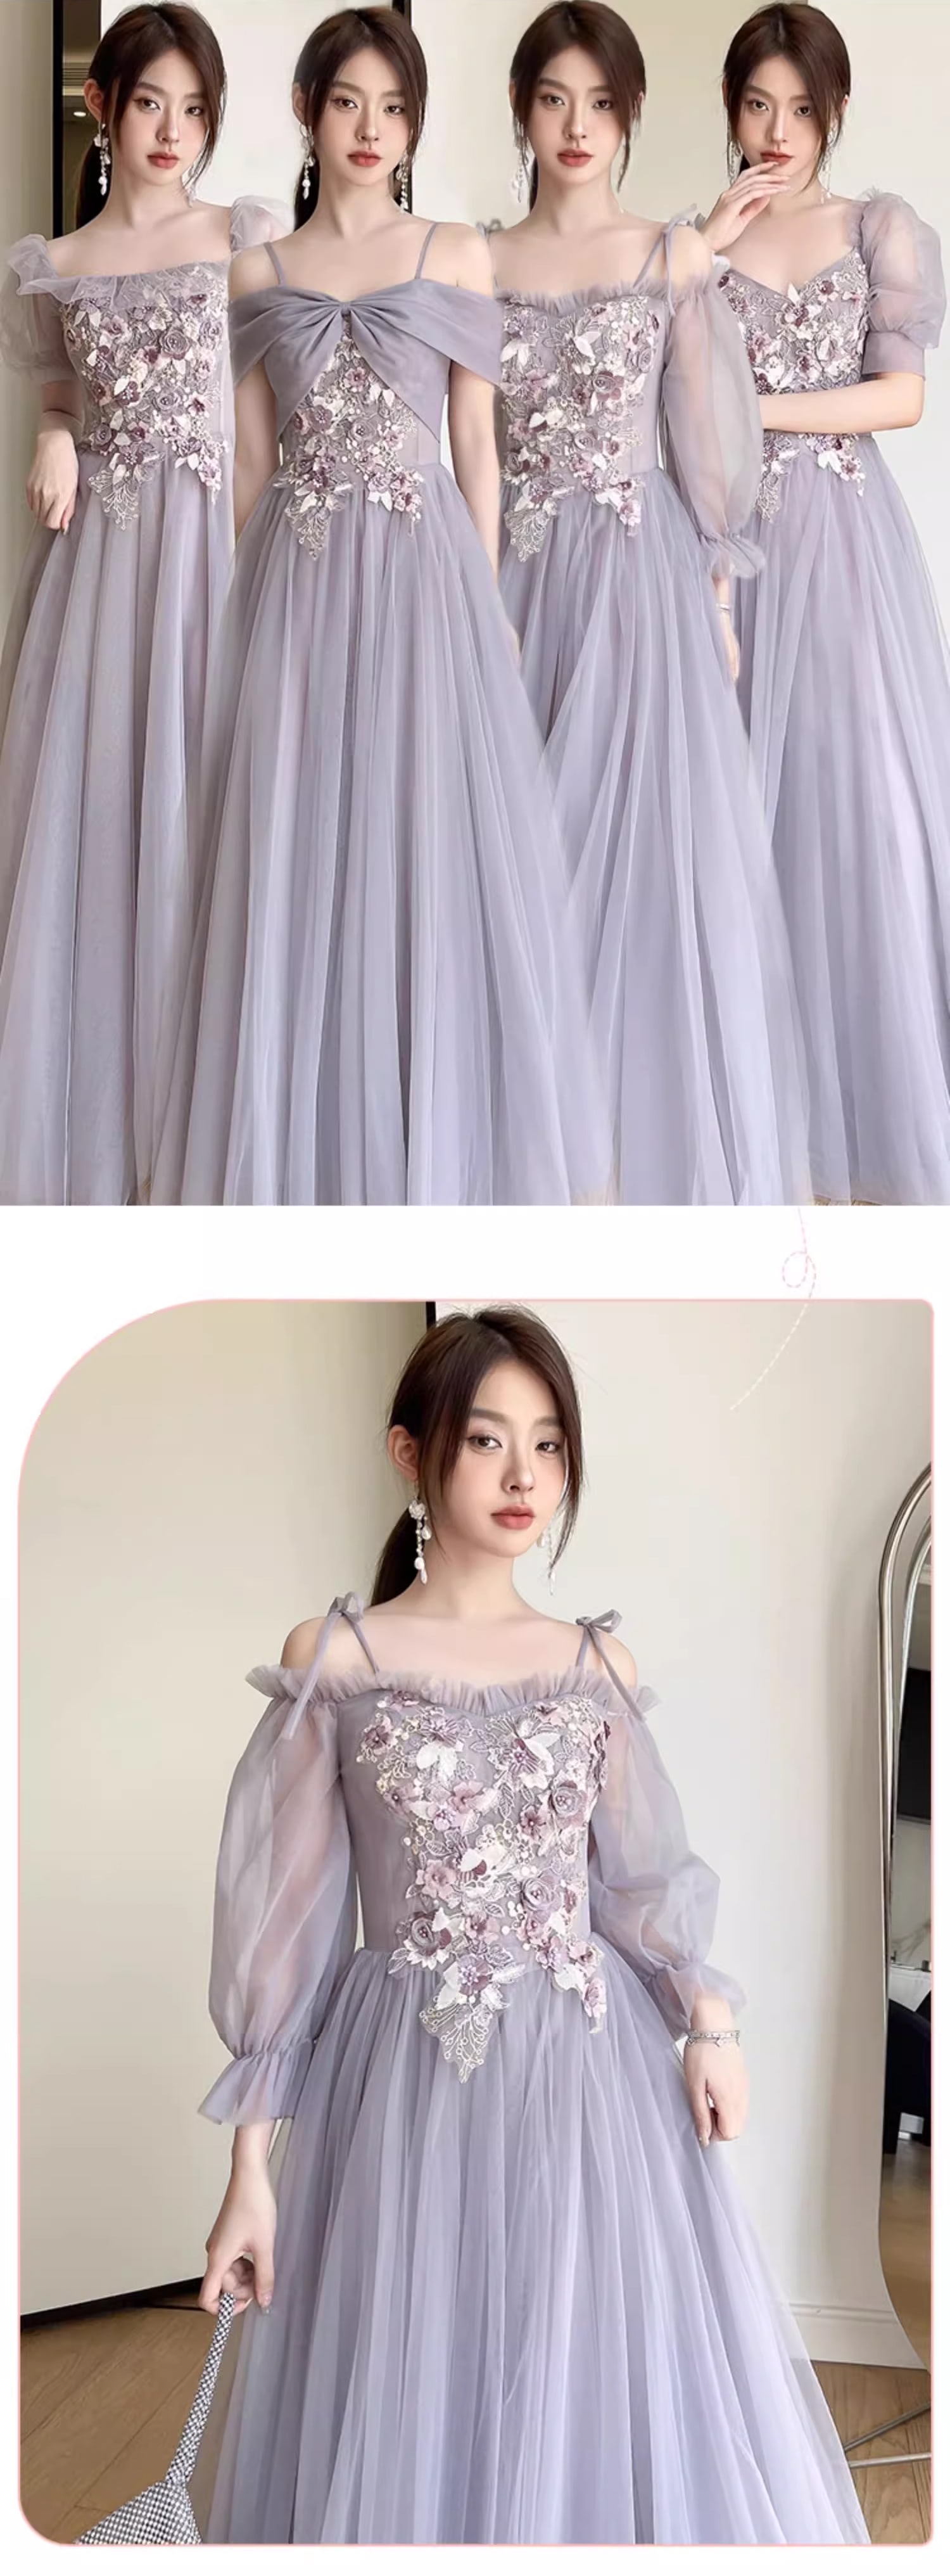 Fairy-Grayish-Purple-Floral-Embroidery-Wedding-Guest-Bridesmaid-Dress11